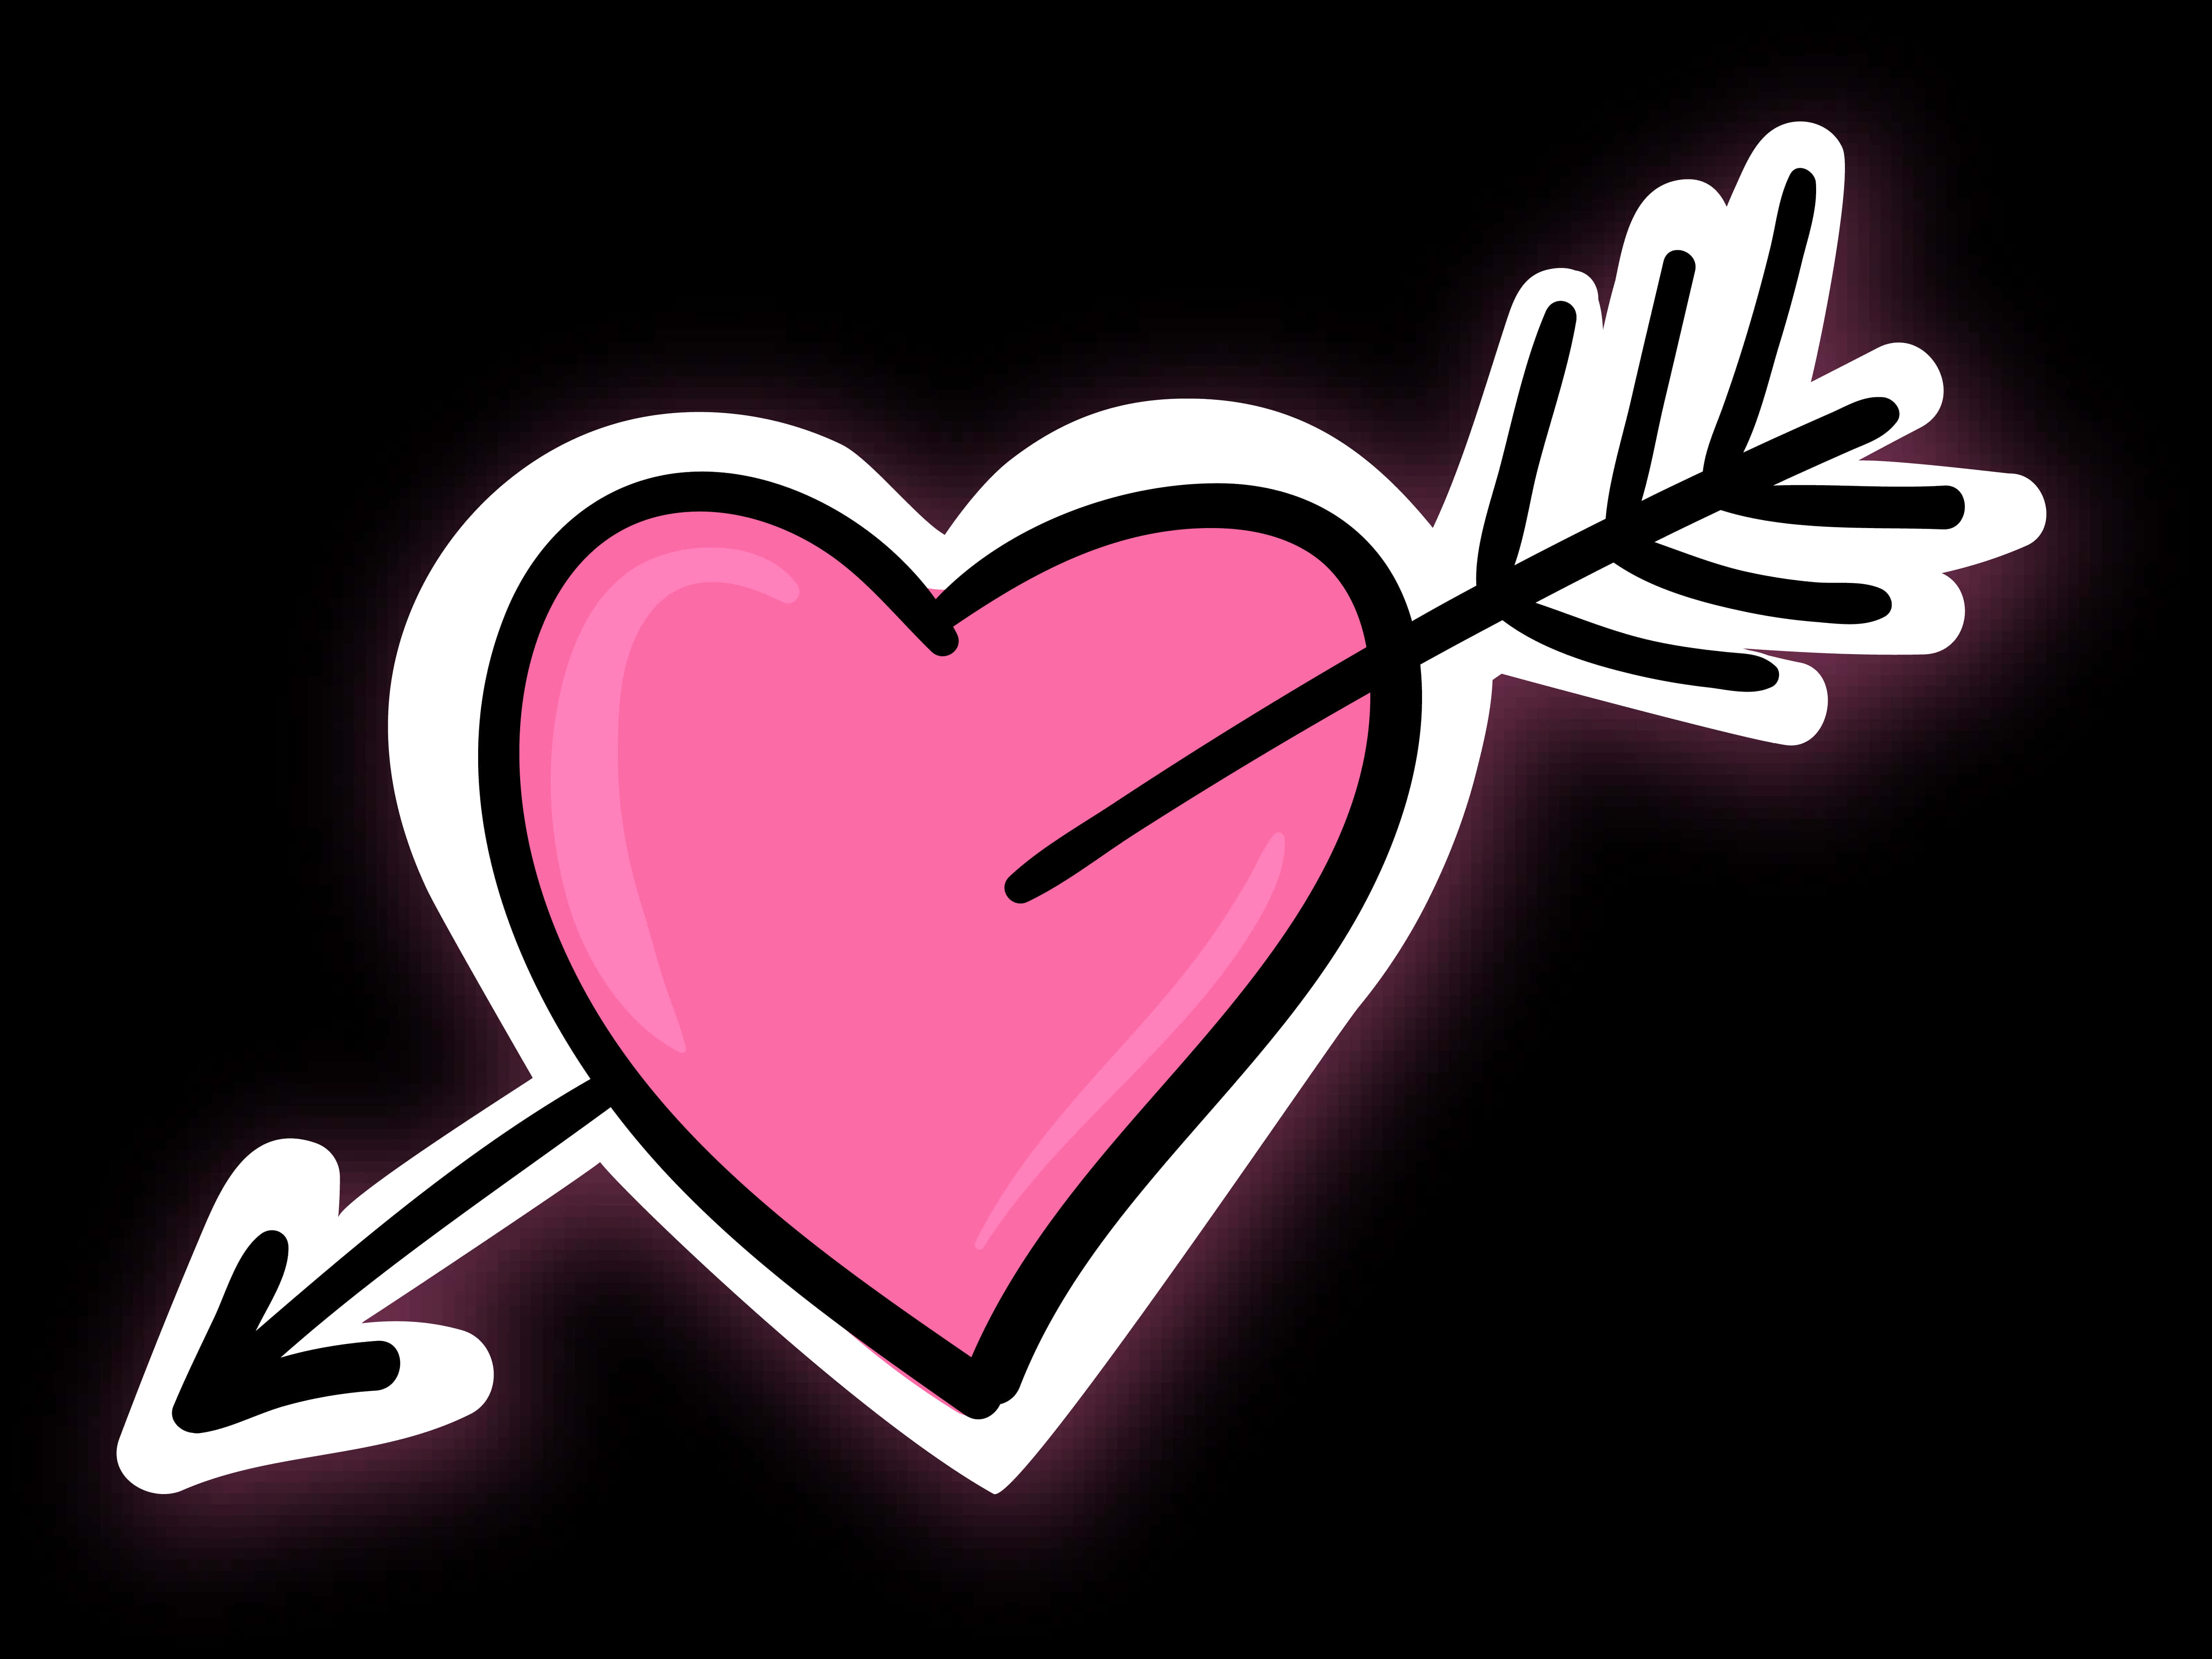 A Pink Heart With An Arrow